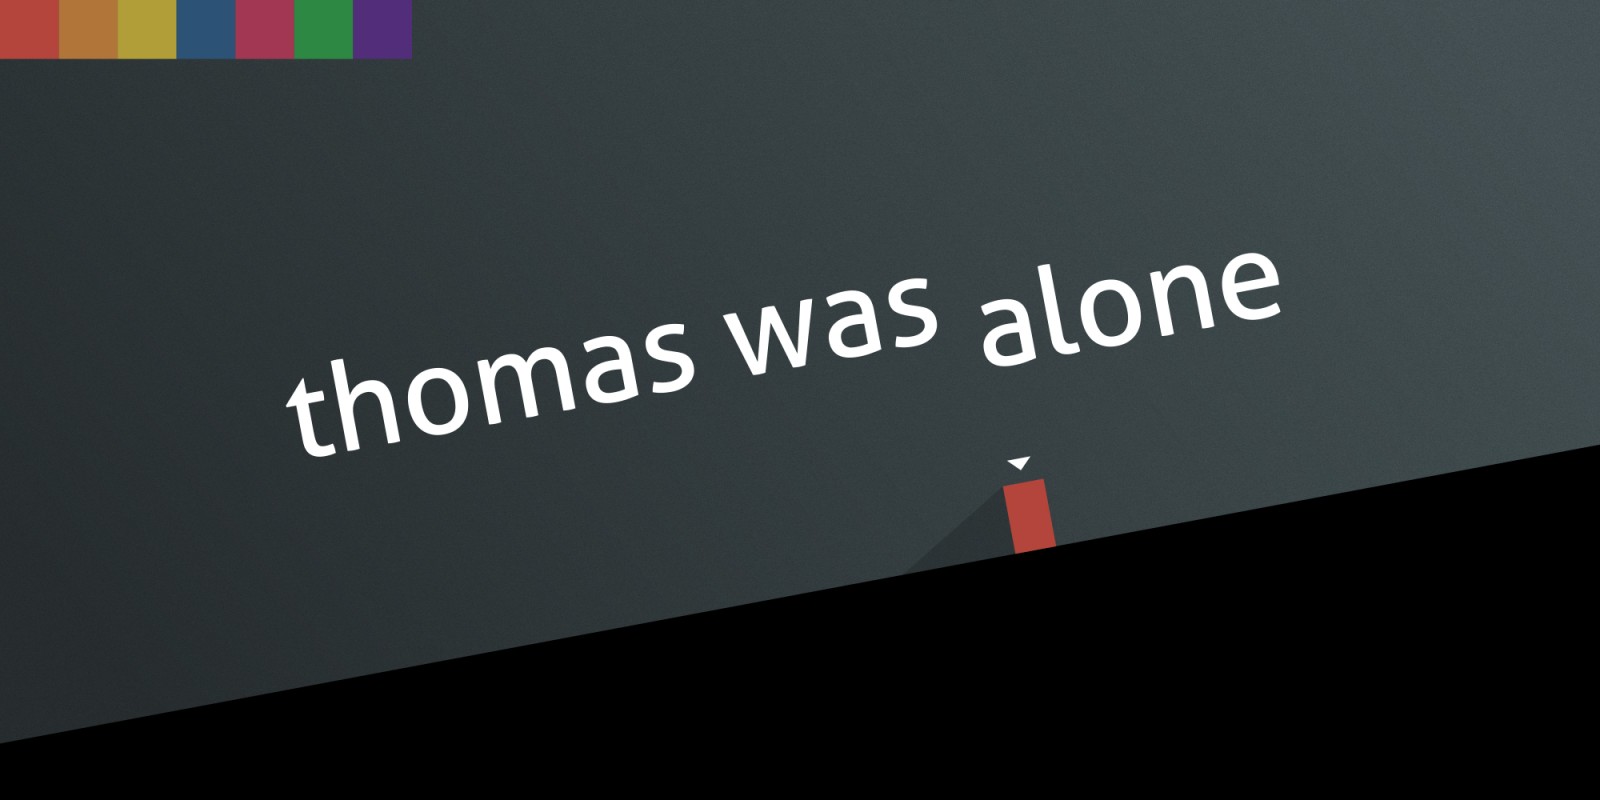 thomas was alone wii u download free